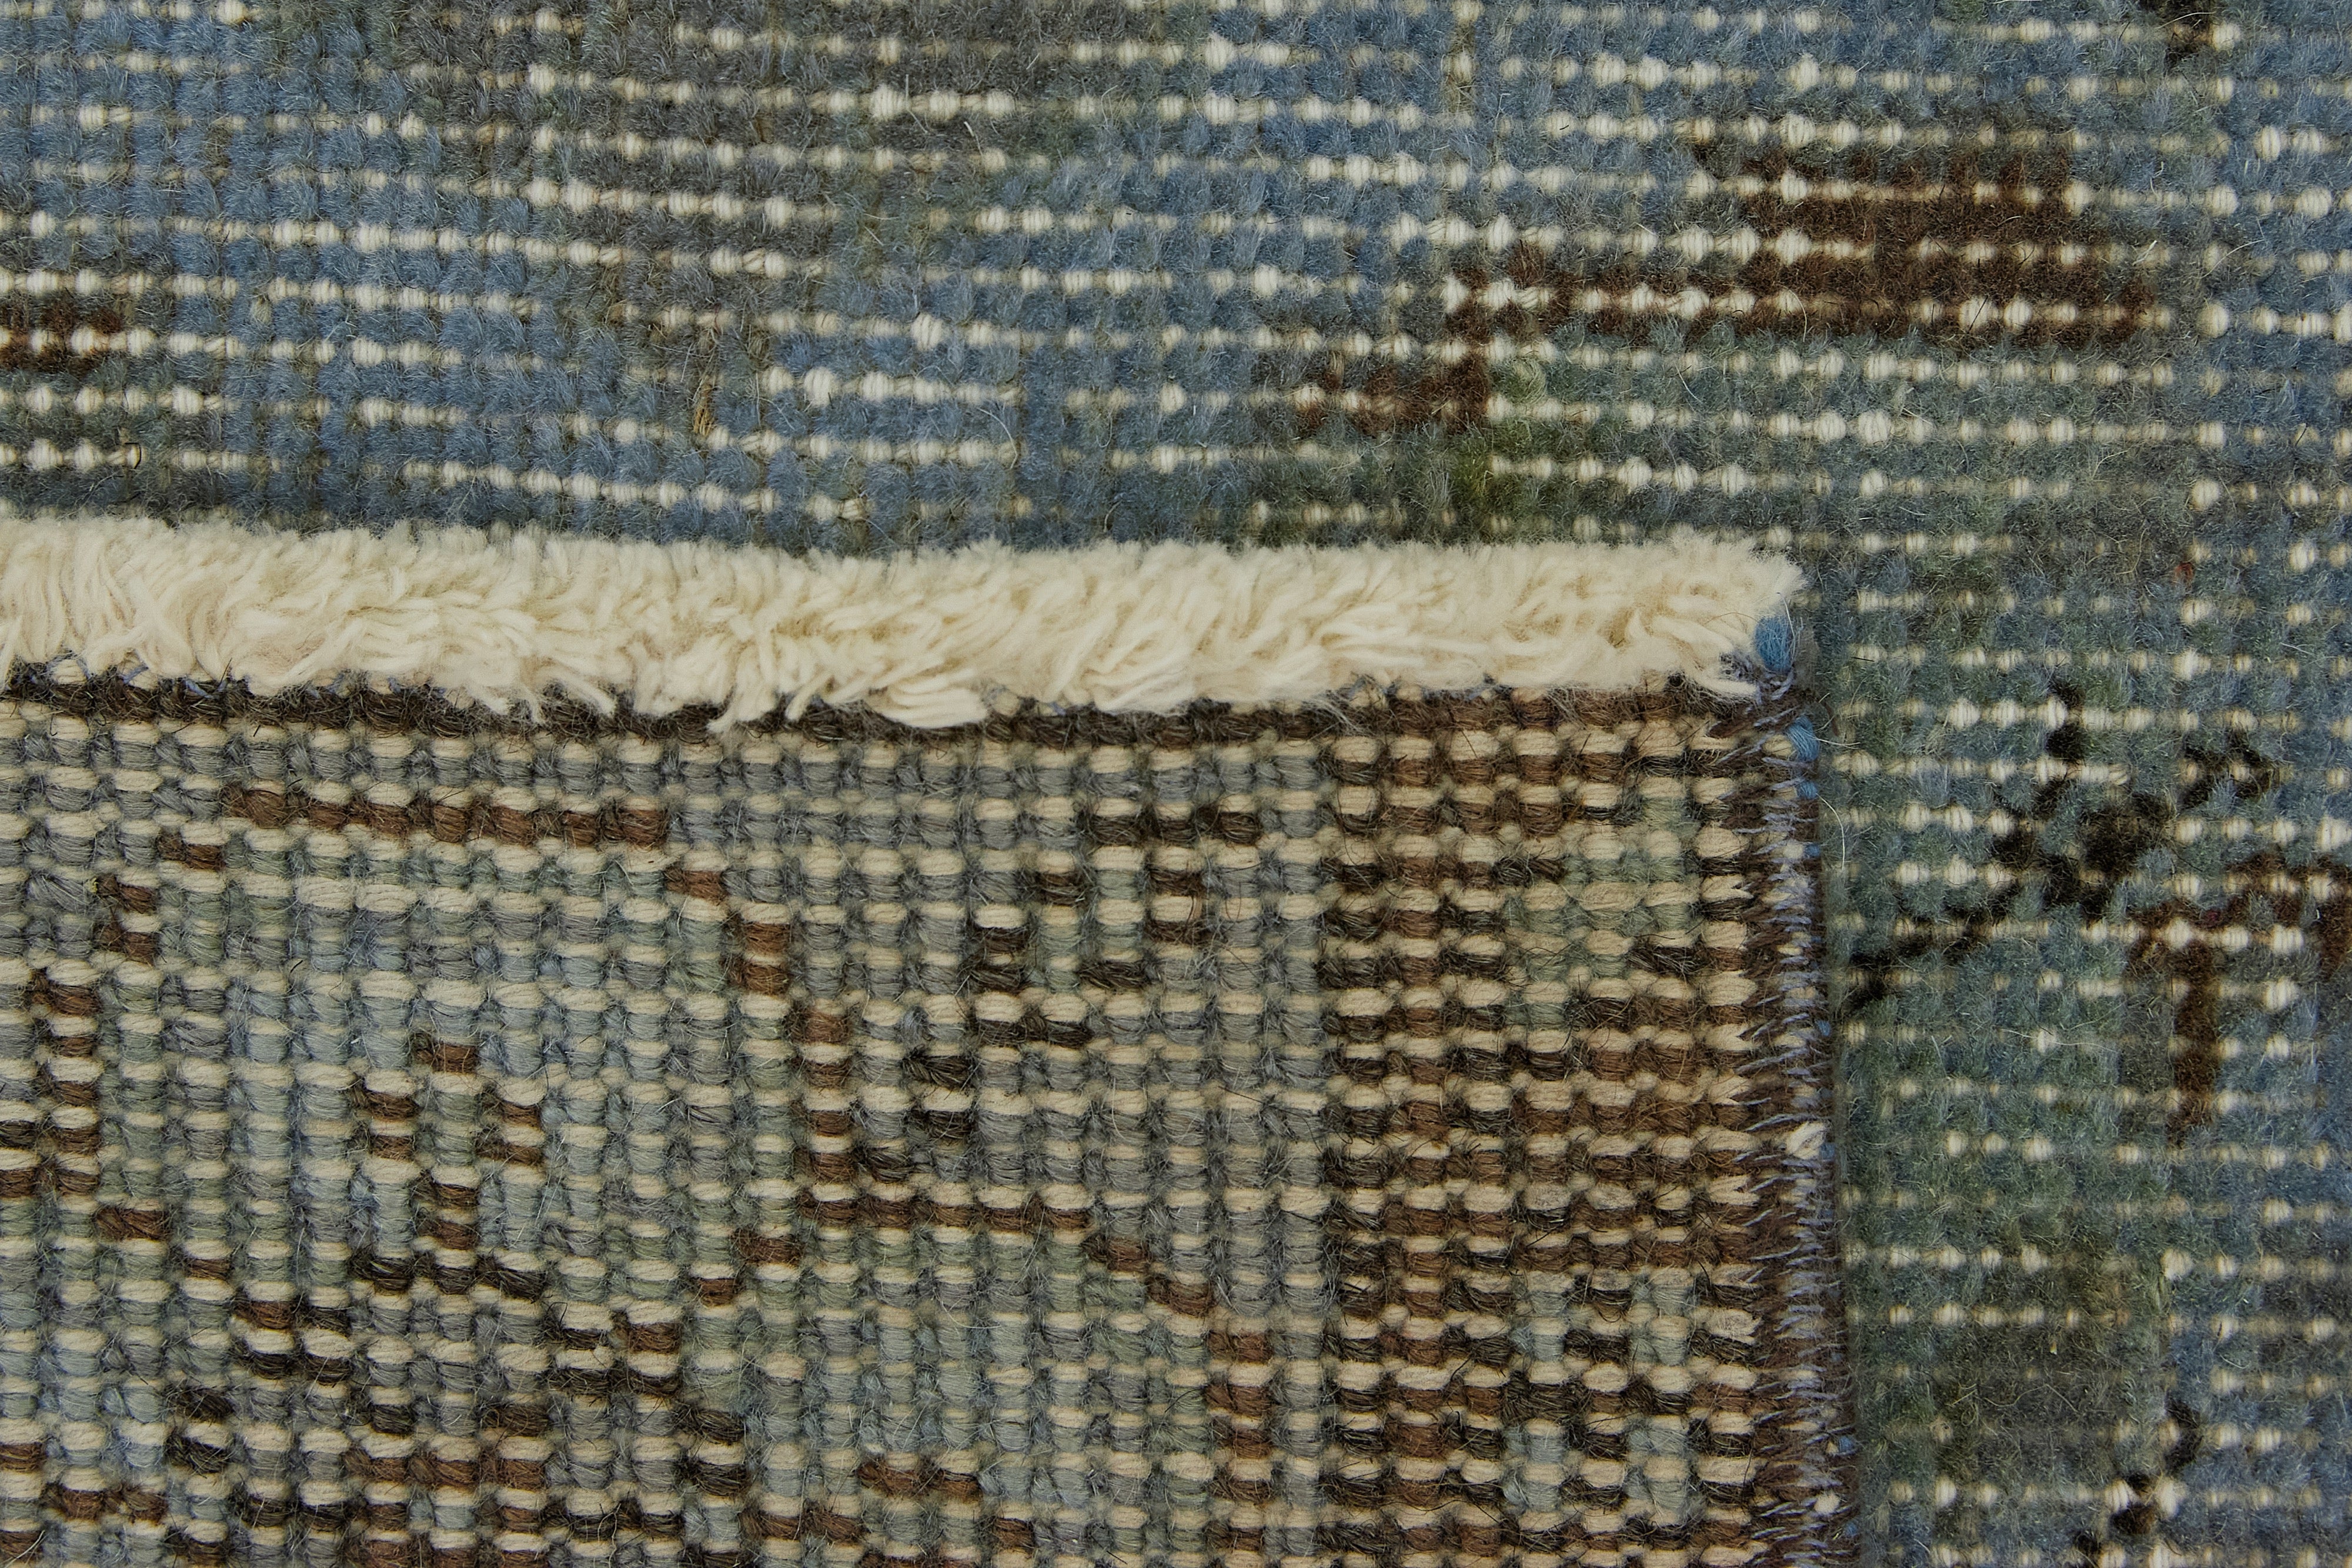 Masterful Weaving - Kairi's Turkish Carpet Excellence